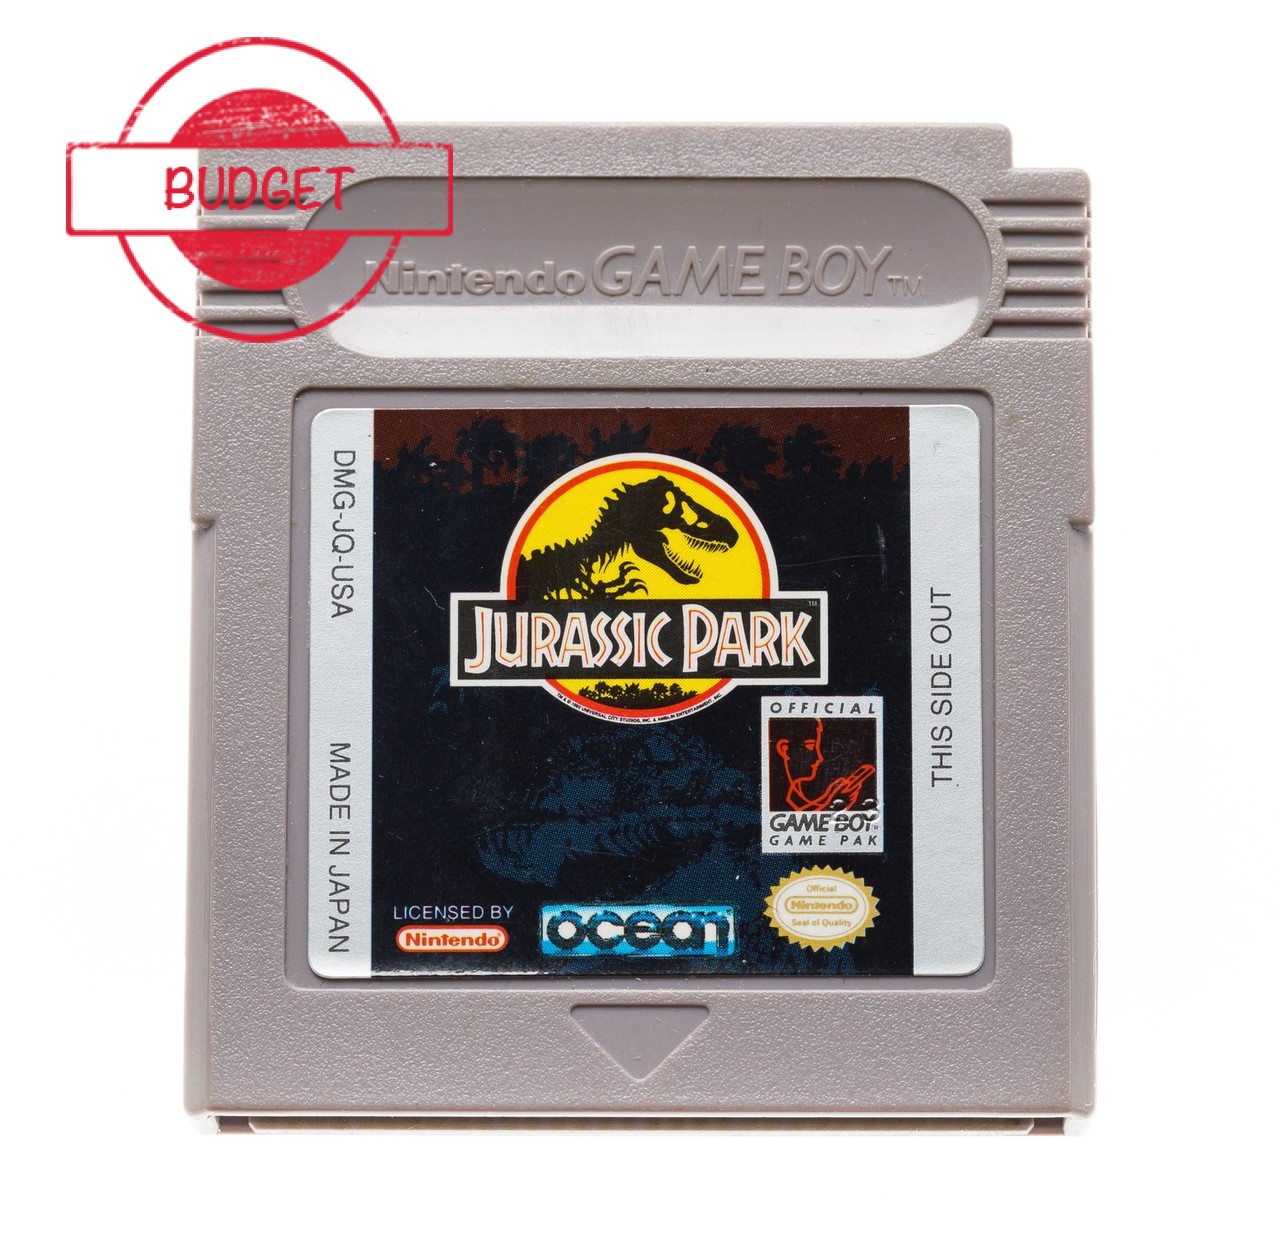 Jurassic Park - Budget Kopen | Gameboy Classic Games